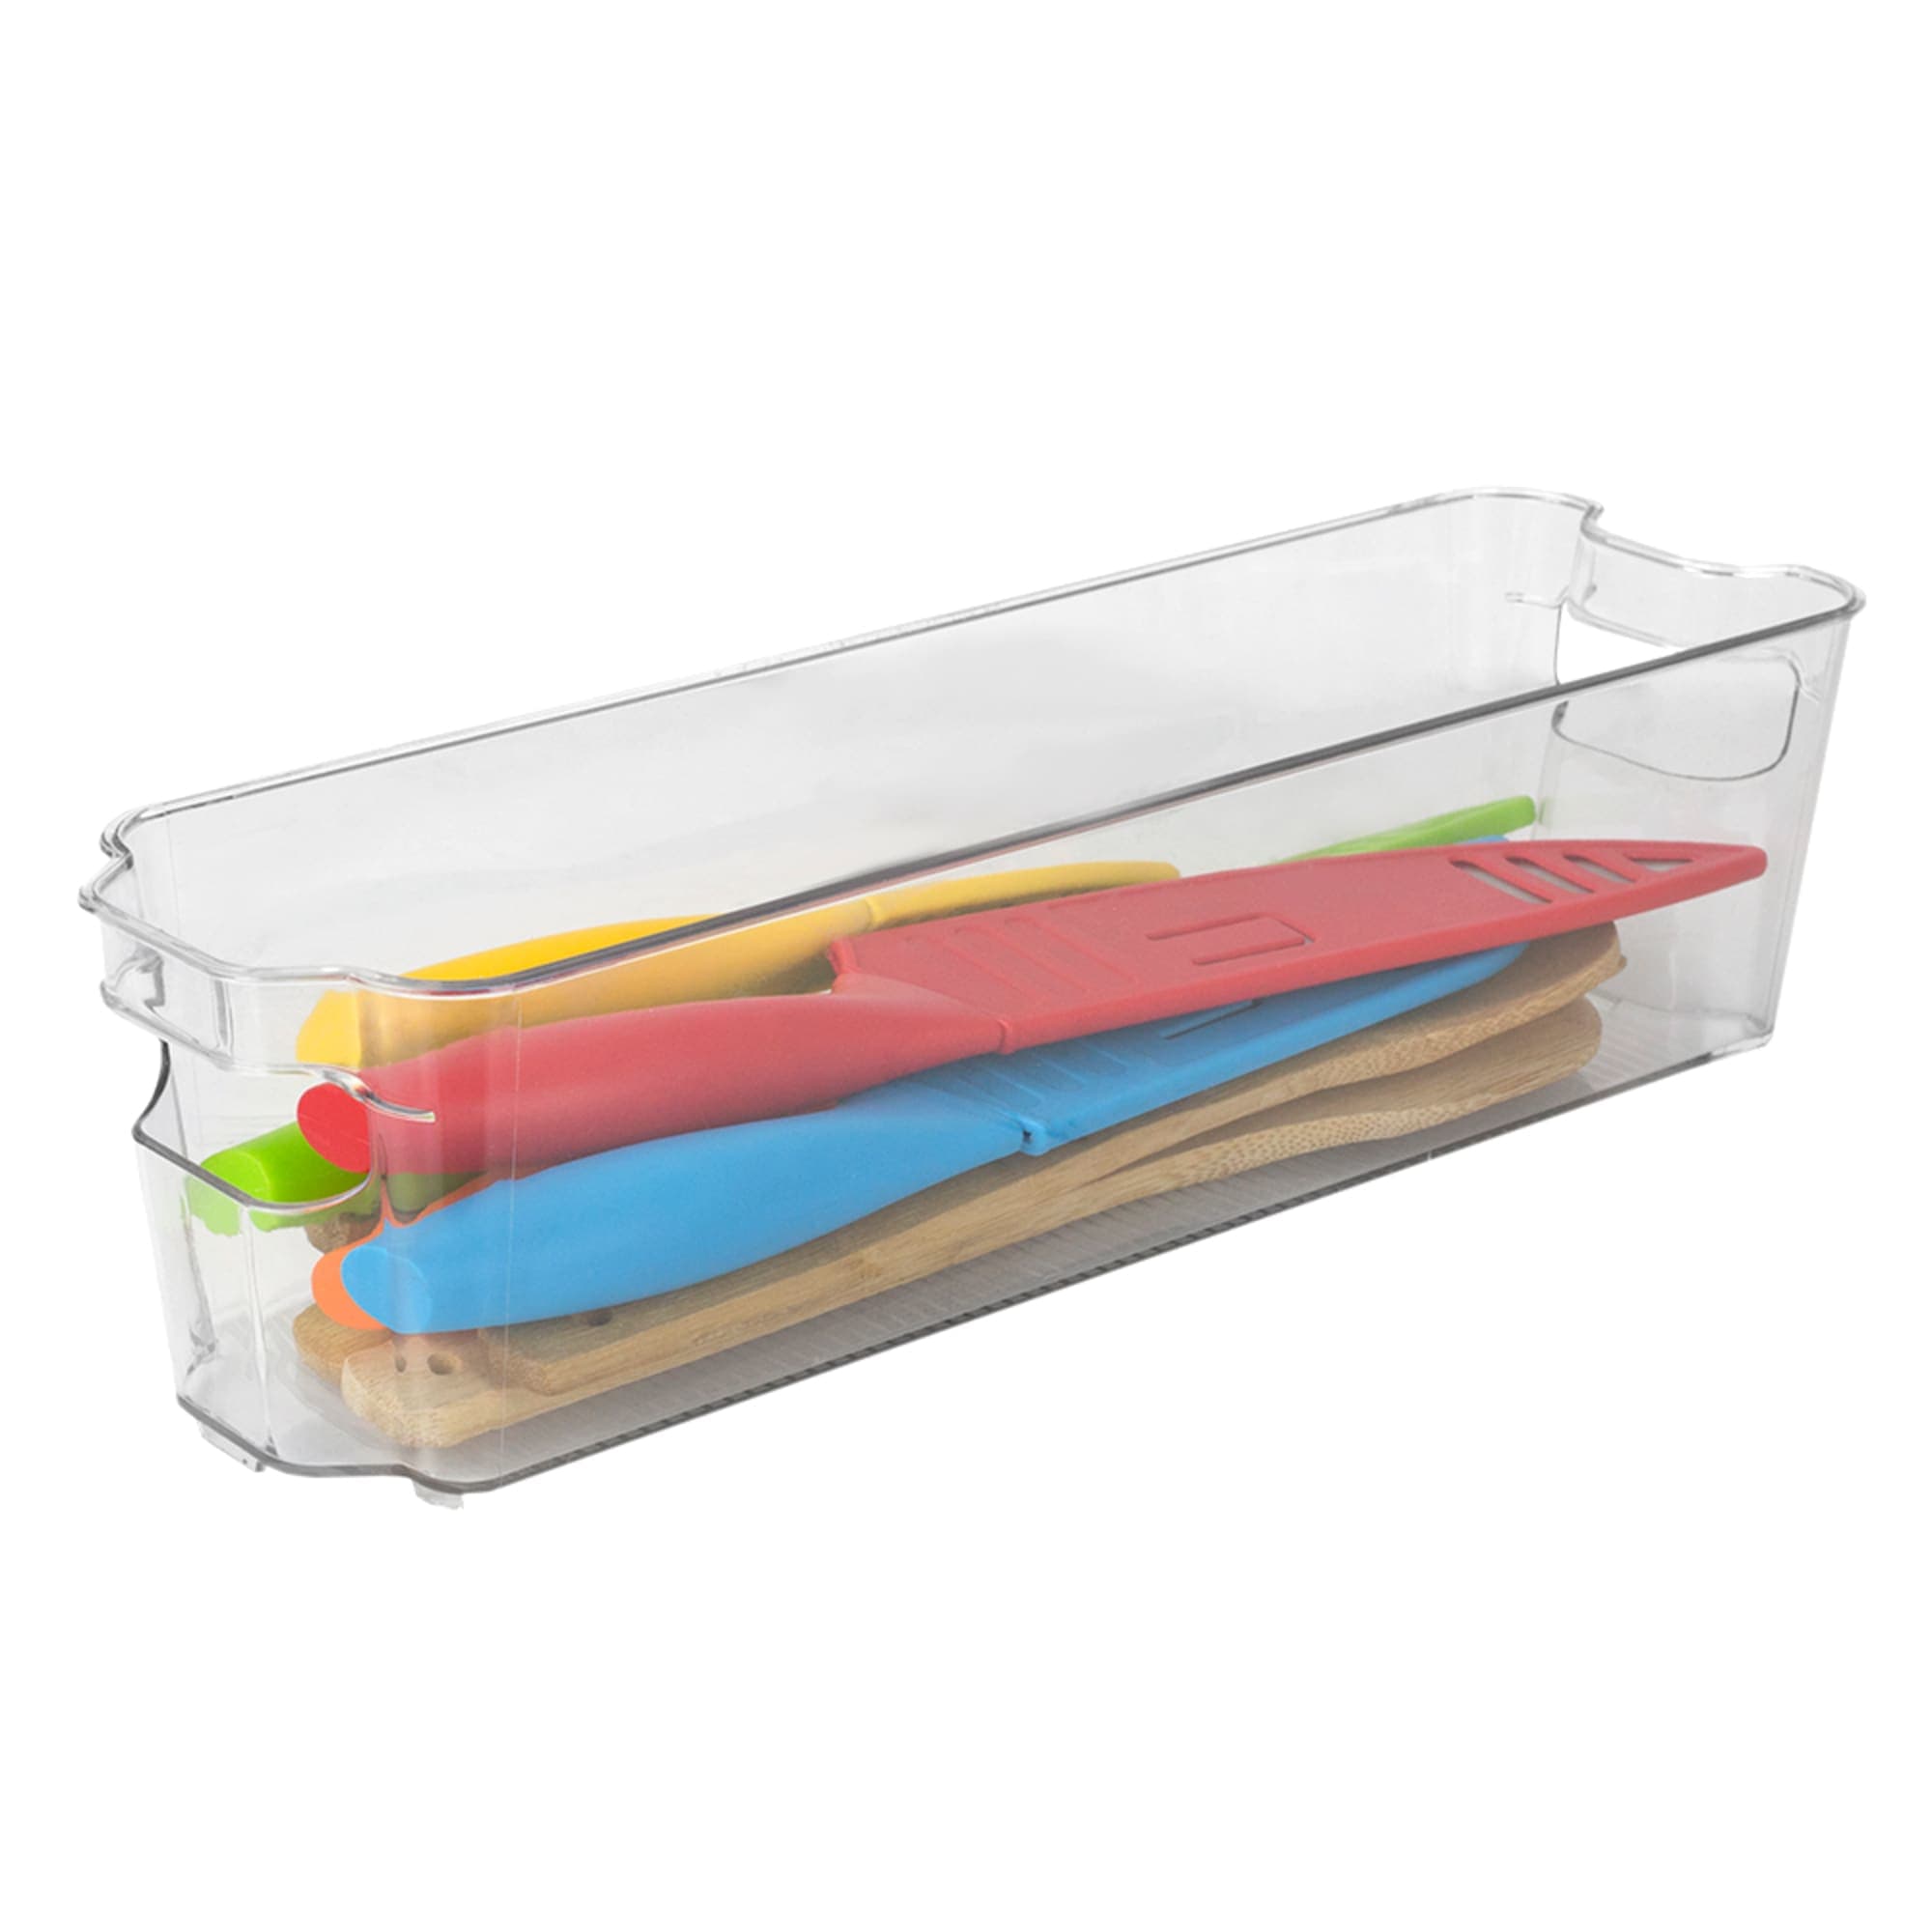 Home Basics Multi-Purpose Plastic Fridge Bin, Clear $3.00 EACH, CASE PACK OF 12